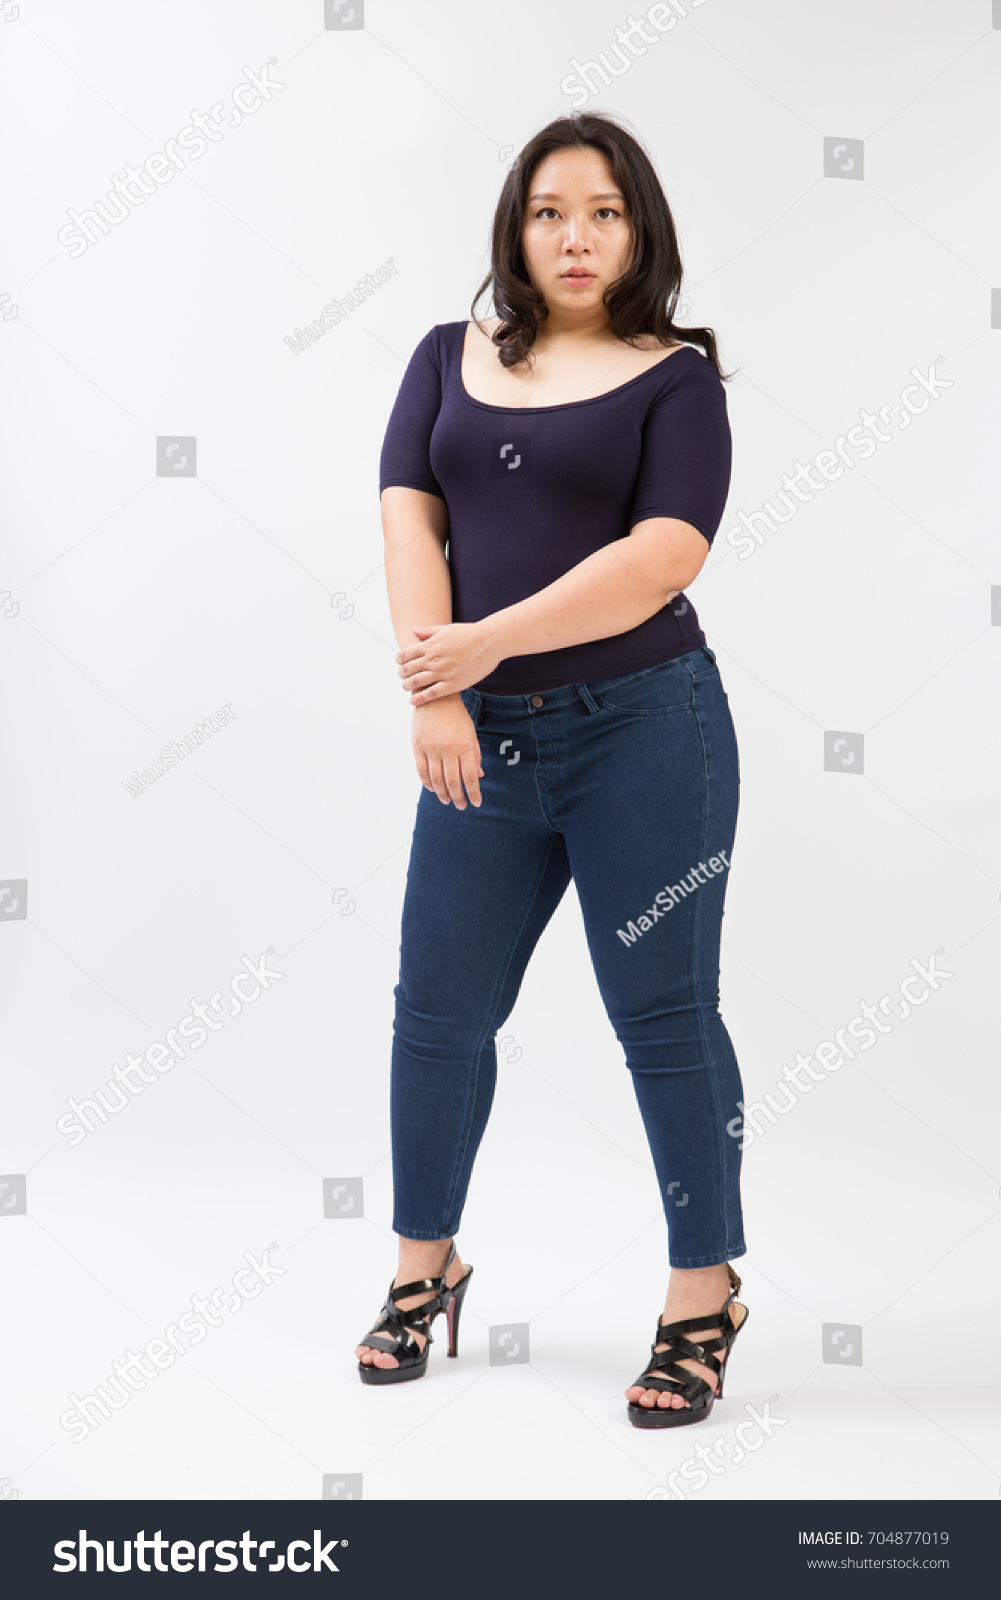 Beautiful Fat Woman Plus Model Stock Photo Now) 704877019